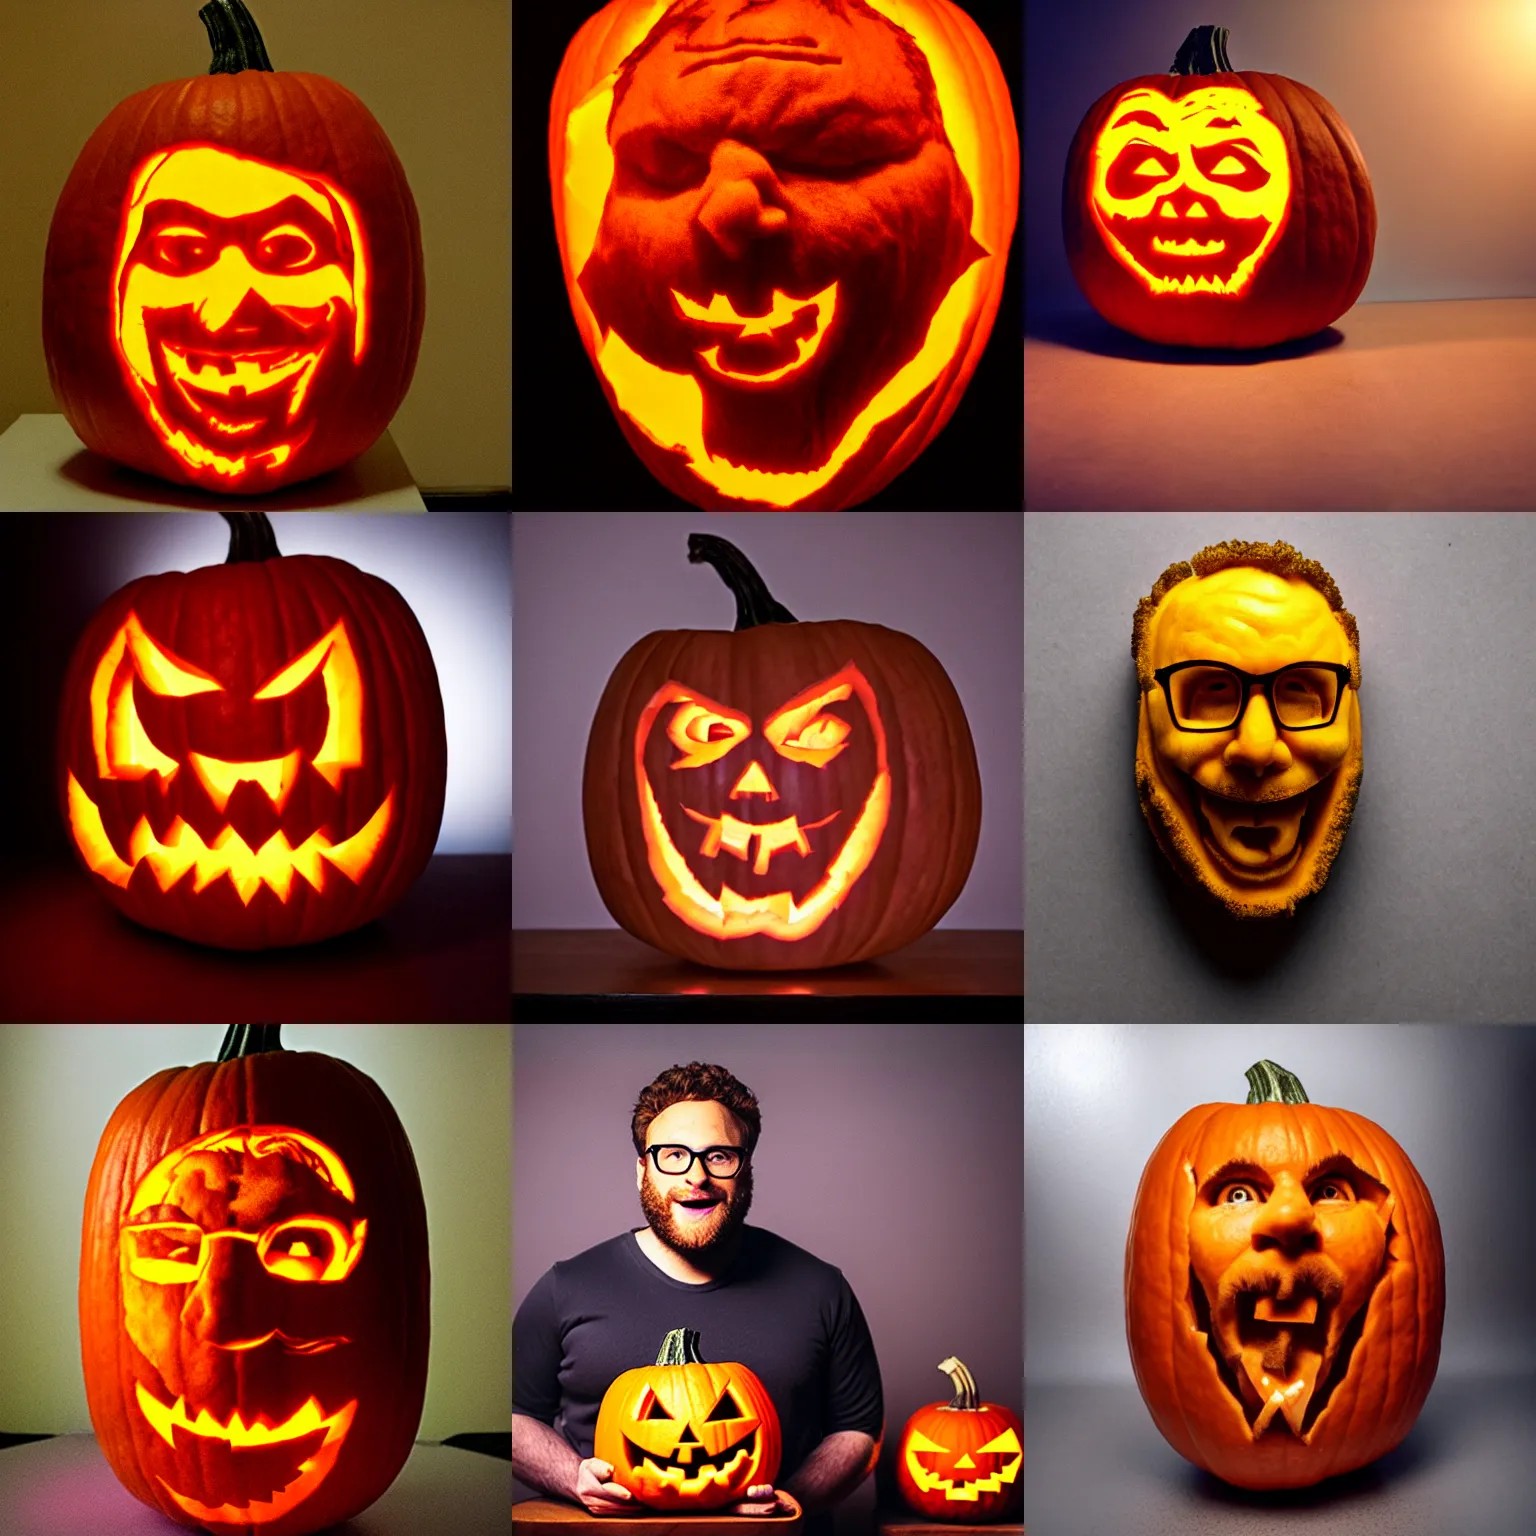 Prompt: pumpkin carving of seth rogen's face, jack - o'- lantern, halloween, cinematic, dramatic lighting, ultra detailed